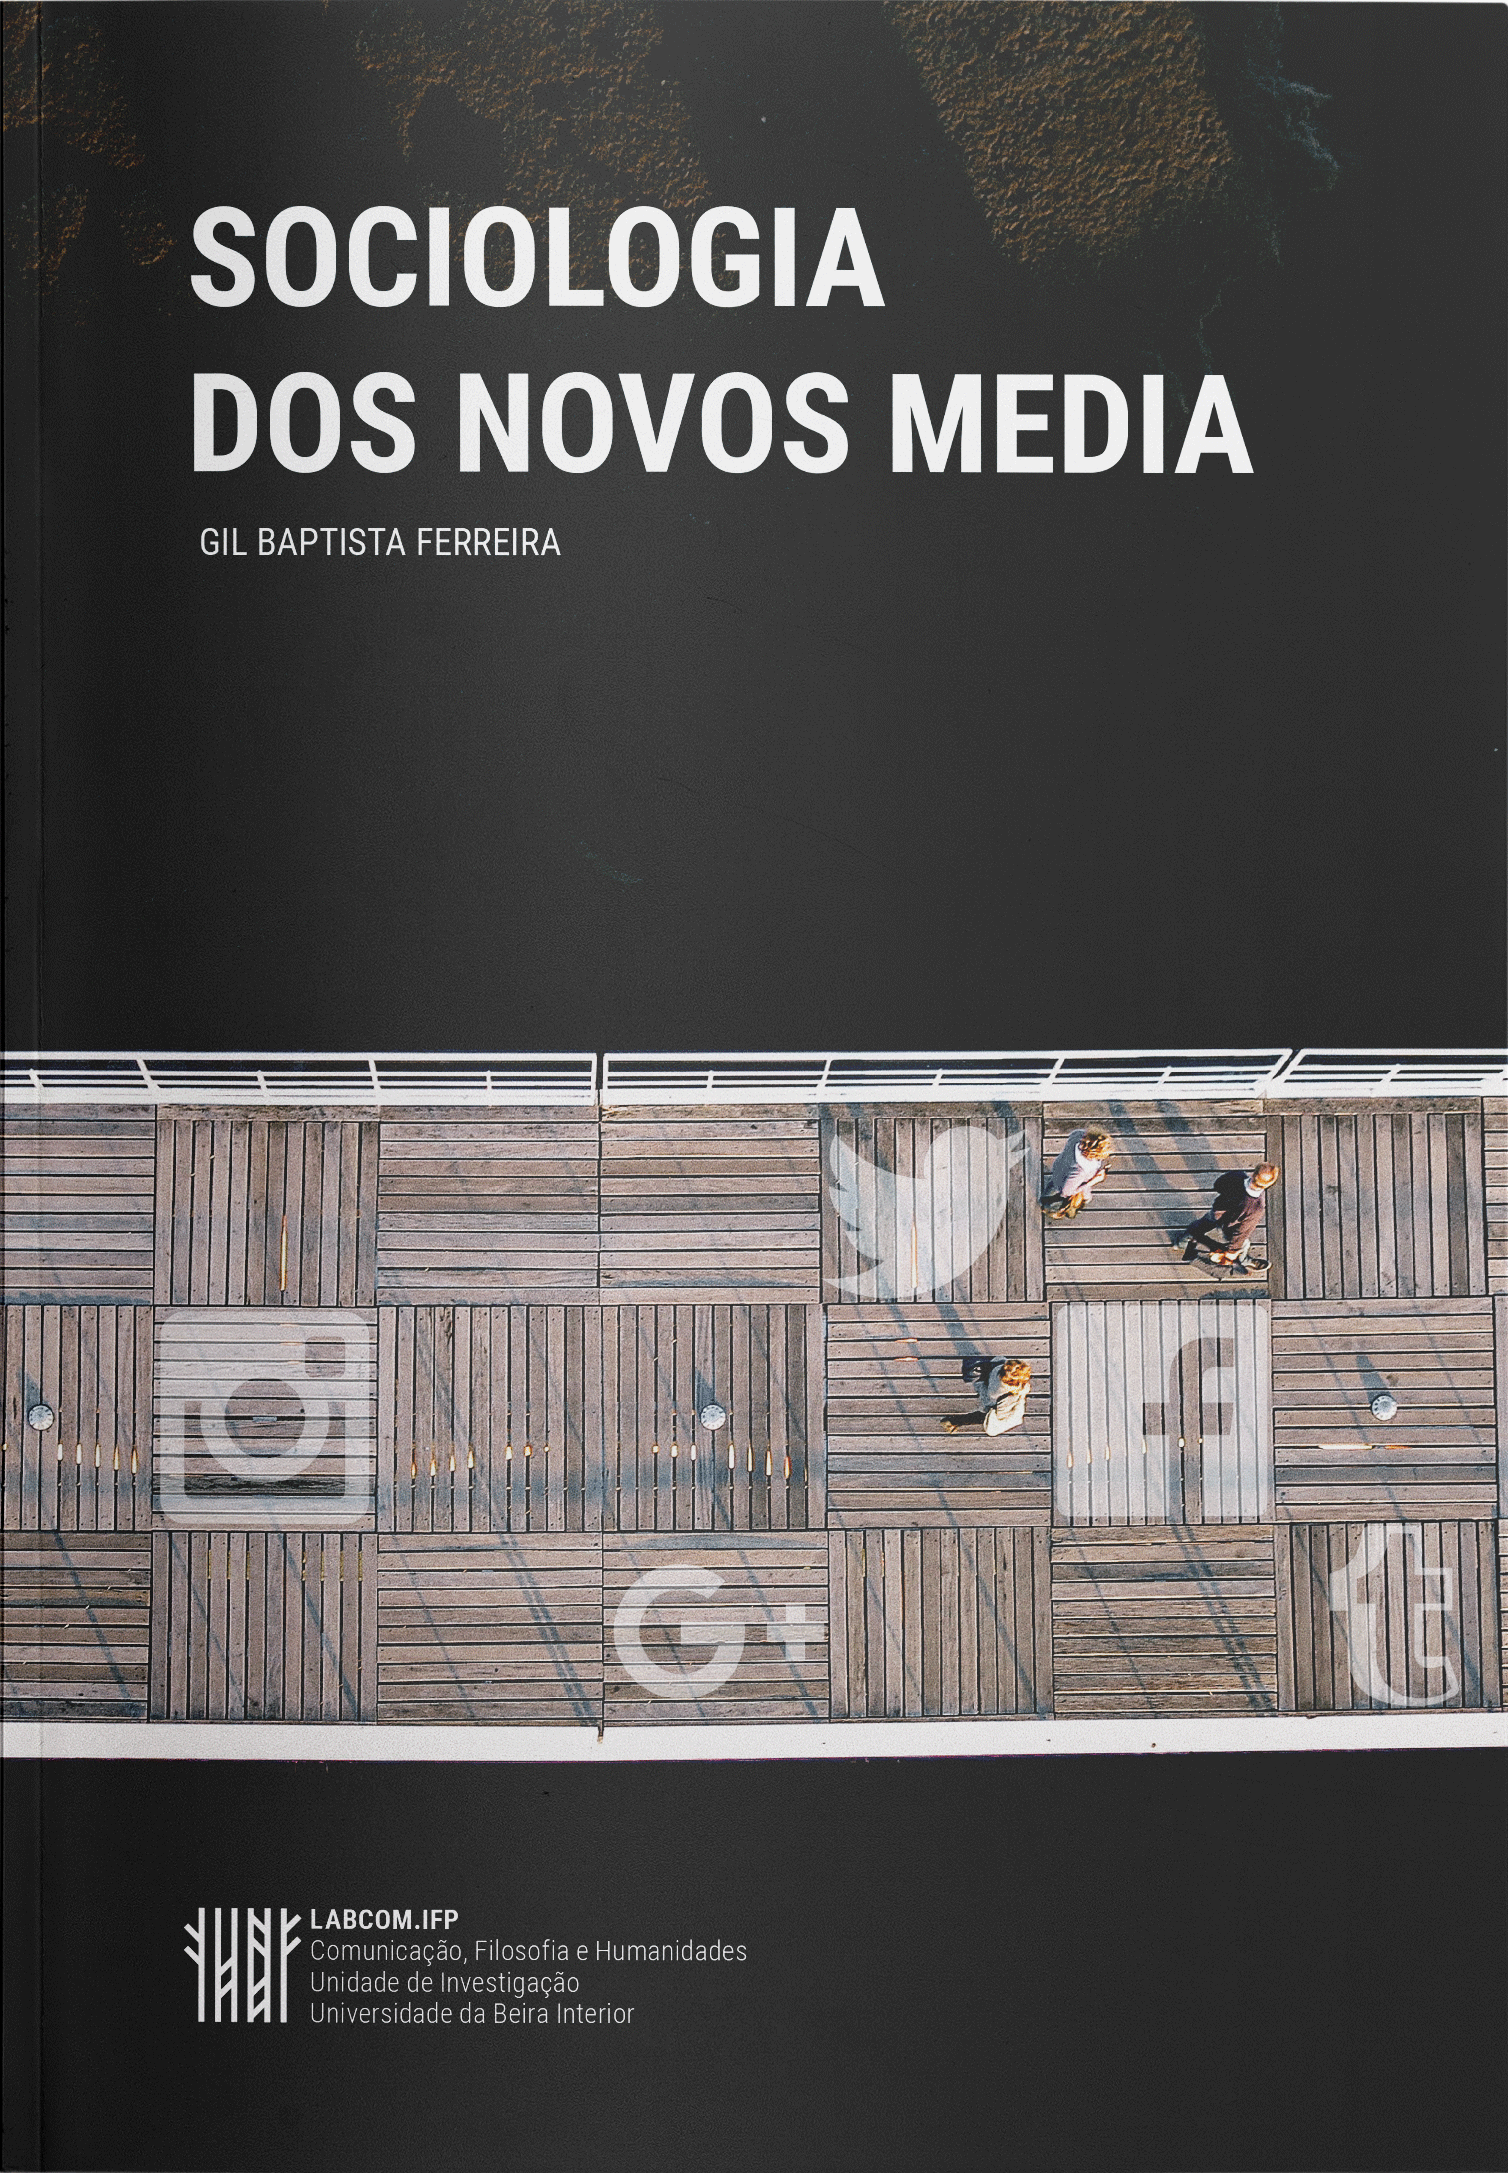 Capa: Gil Baptista Ferreira (2018) Sociologia dos Novos Media. Communication  +  Philosophy  +  Humanities. .